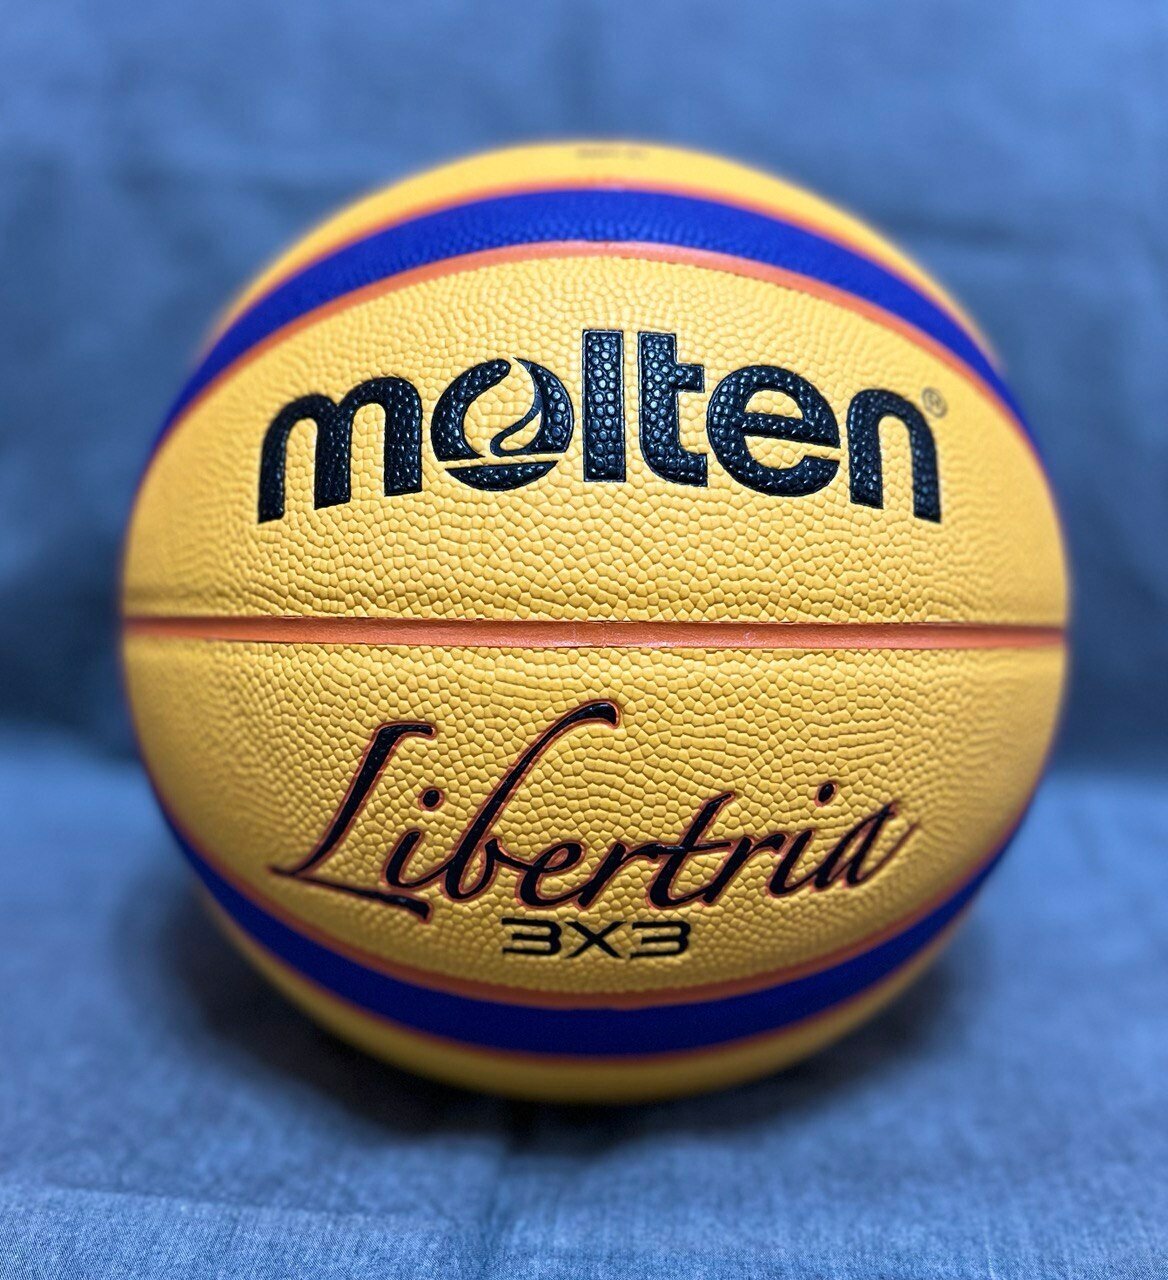 Баскетбольный мяч Molten B33T5000. Размер 6. Yellow/Blue. Outdoor